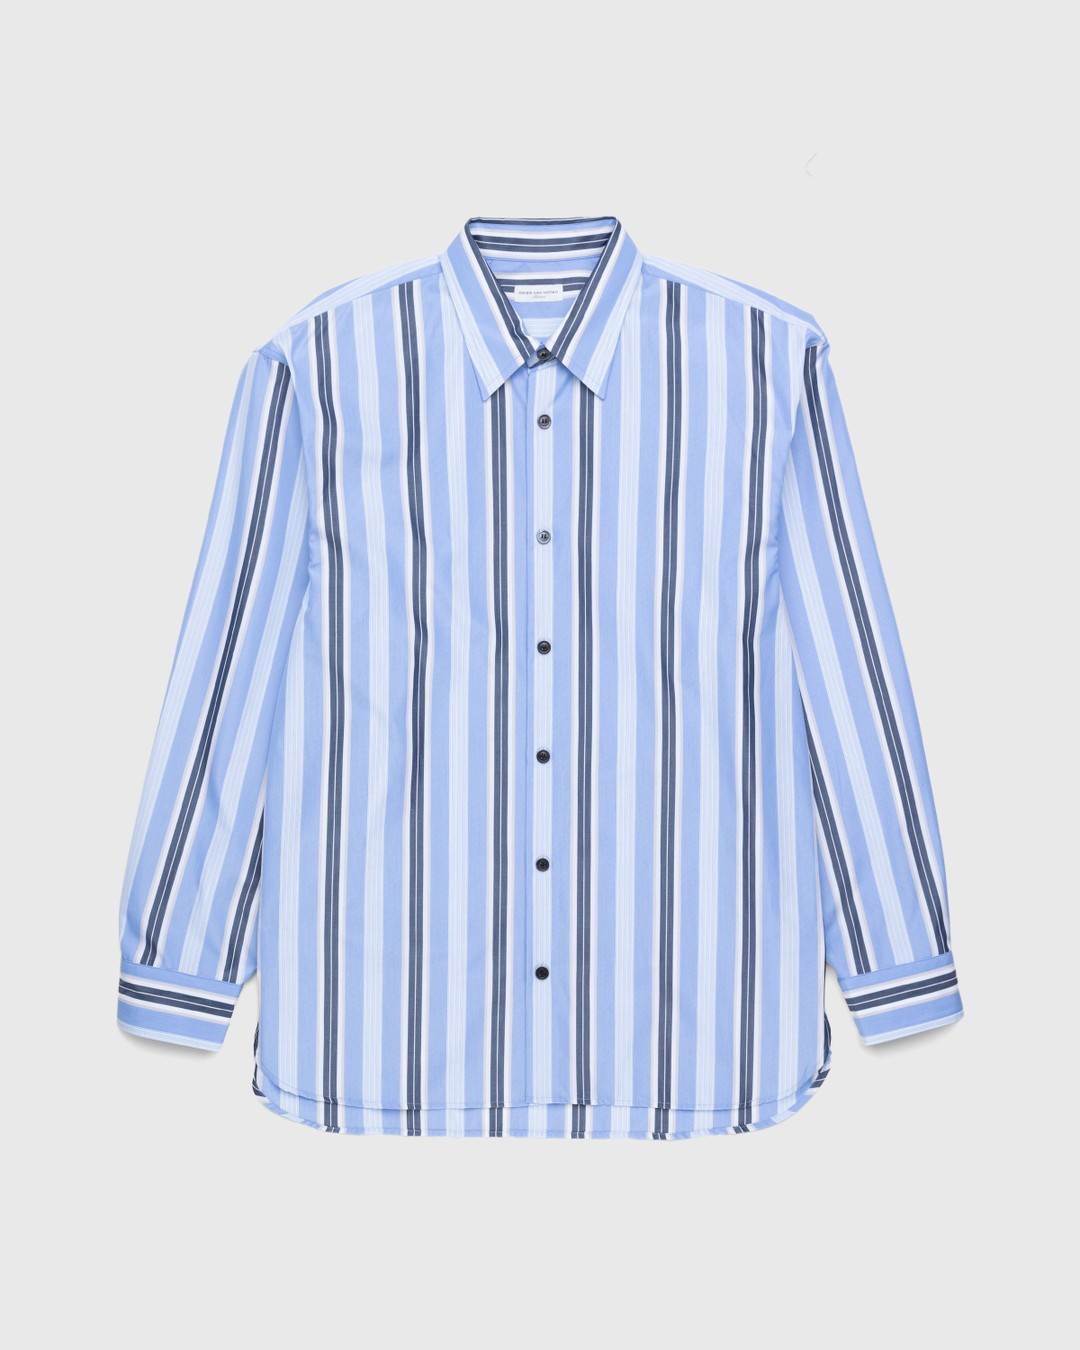 Dries van Noten – Croom Shirt Striped Blue - Longsleeve Shirts - Blue - Image 1